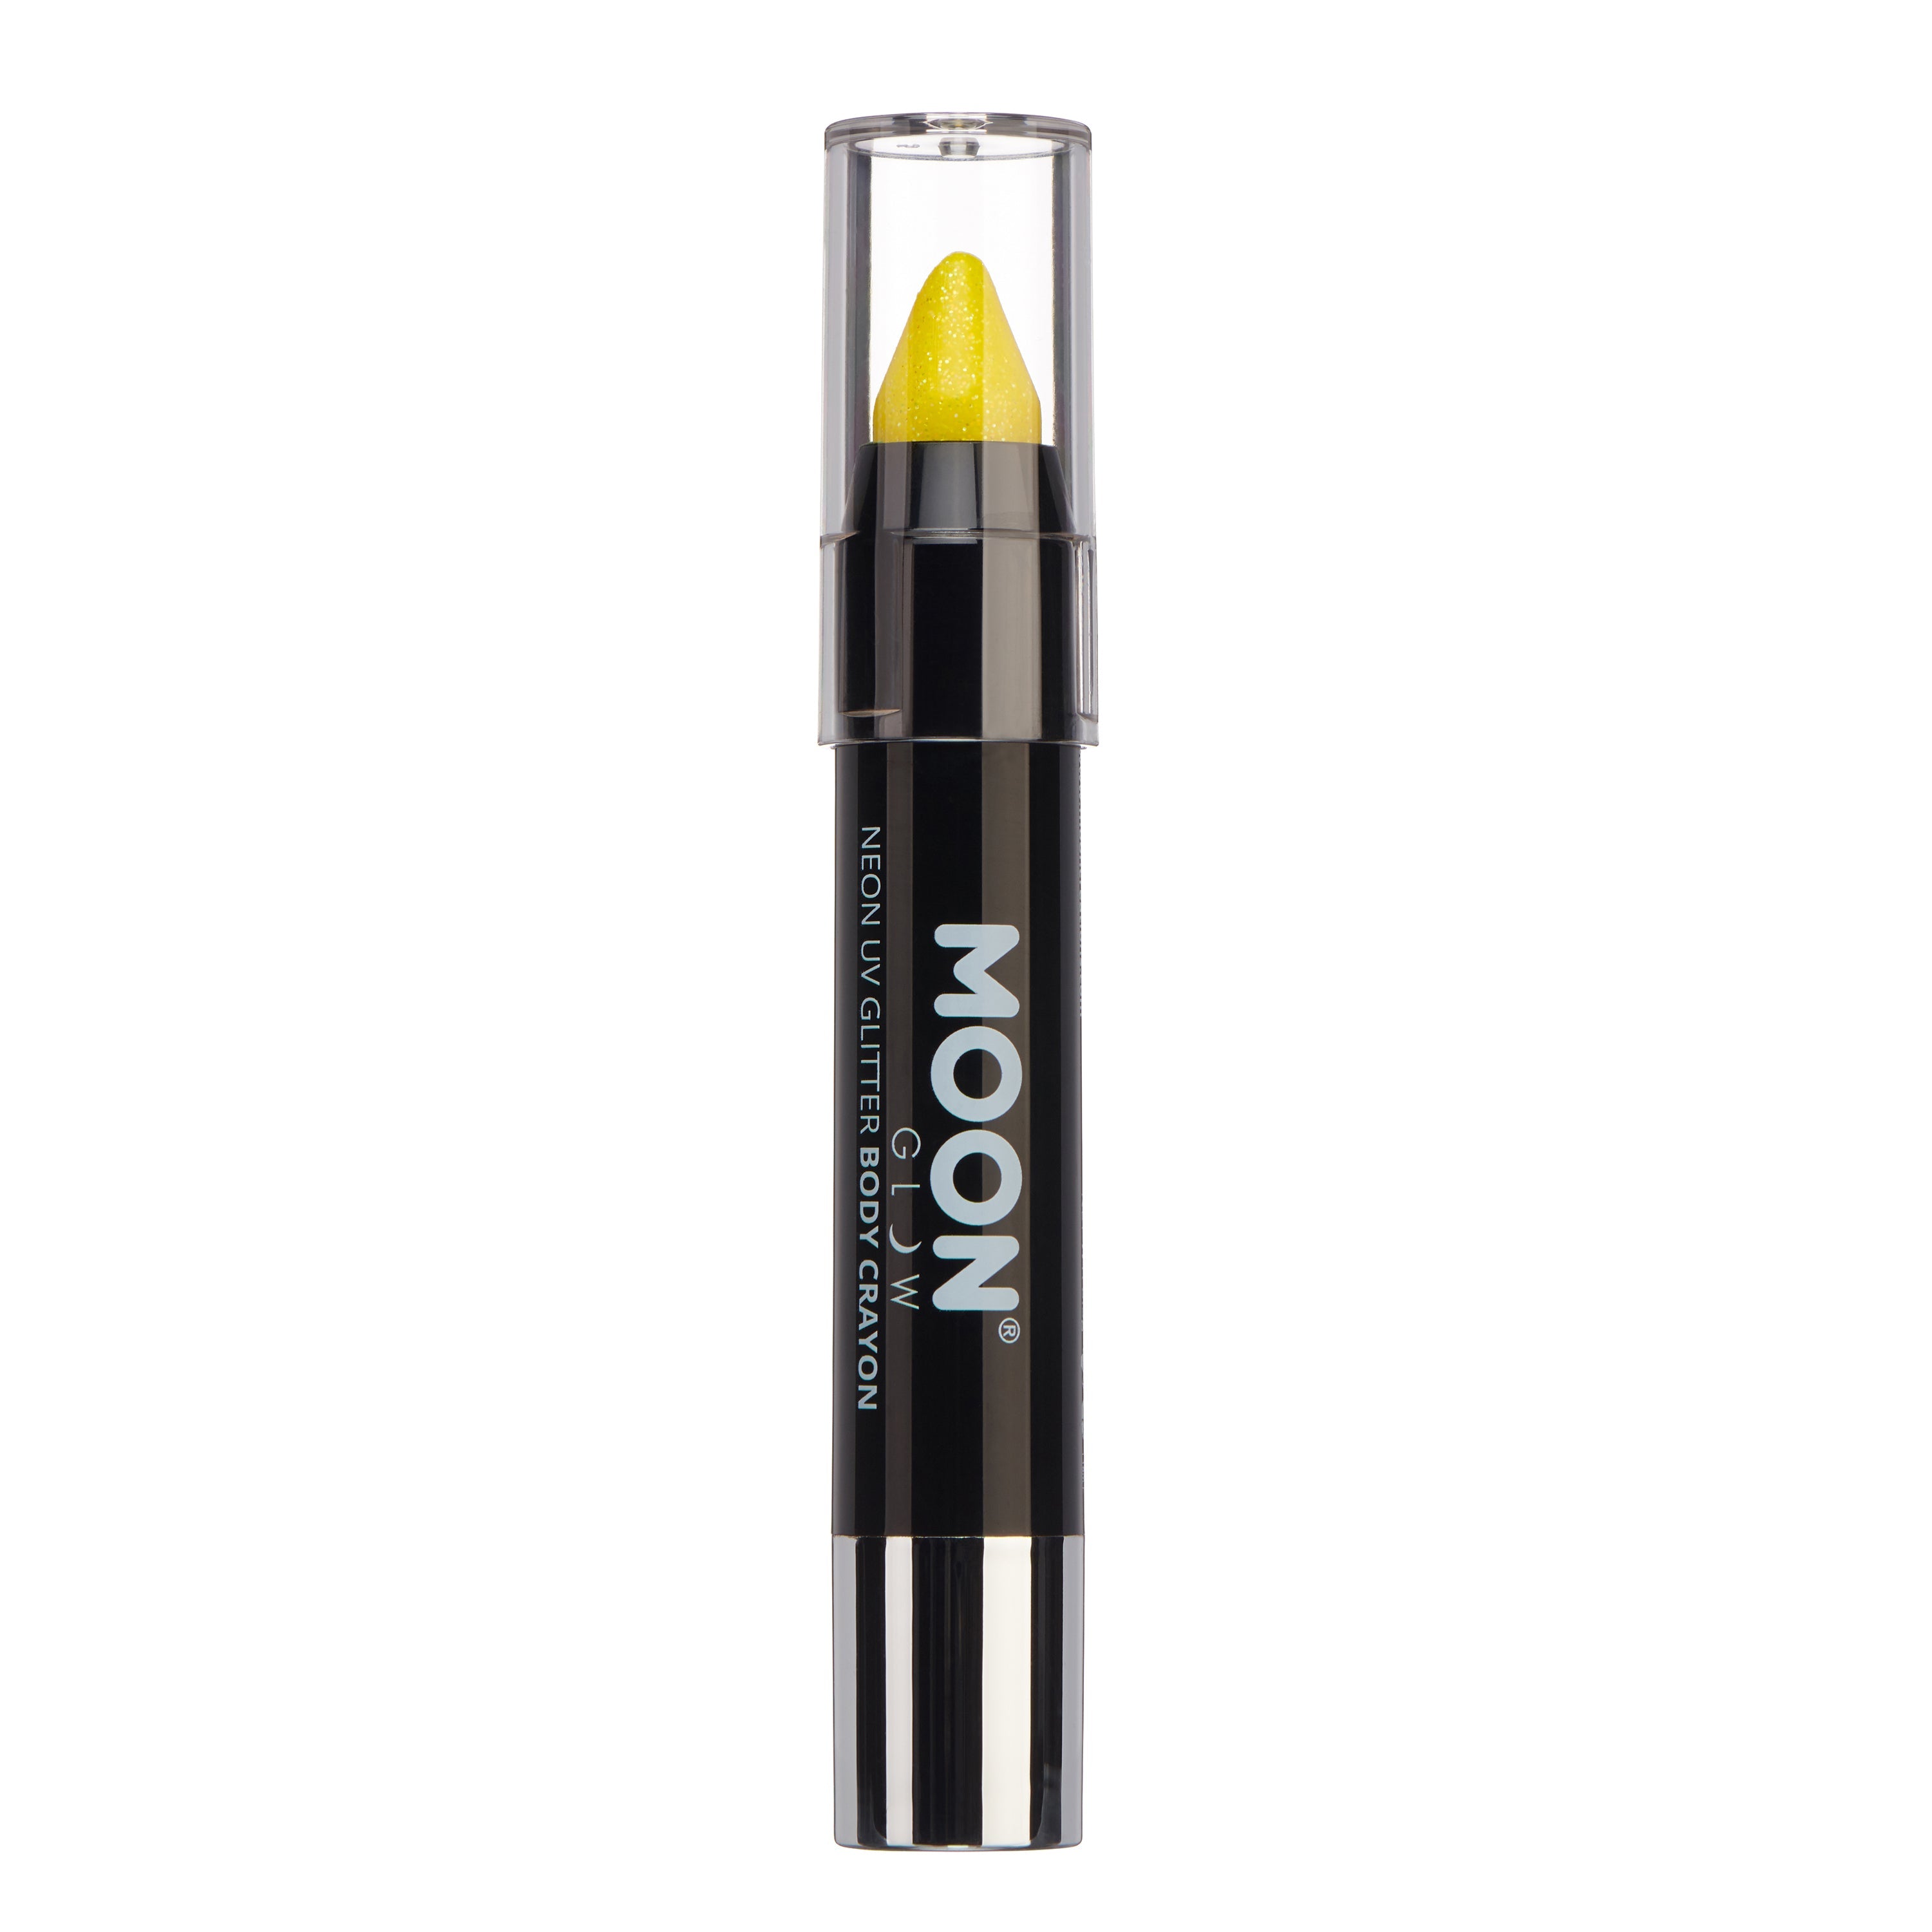 Yellow - Neon UV Glow Blacklight Glitter Face & Body Crayon, 3.5g. Cosmetically certified, FDA & Health Canada compliant and cruelty free.